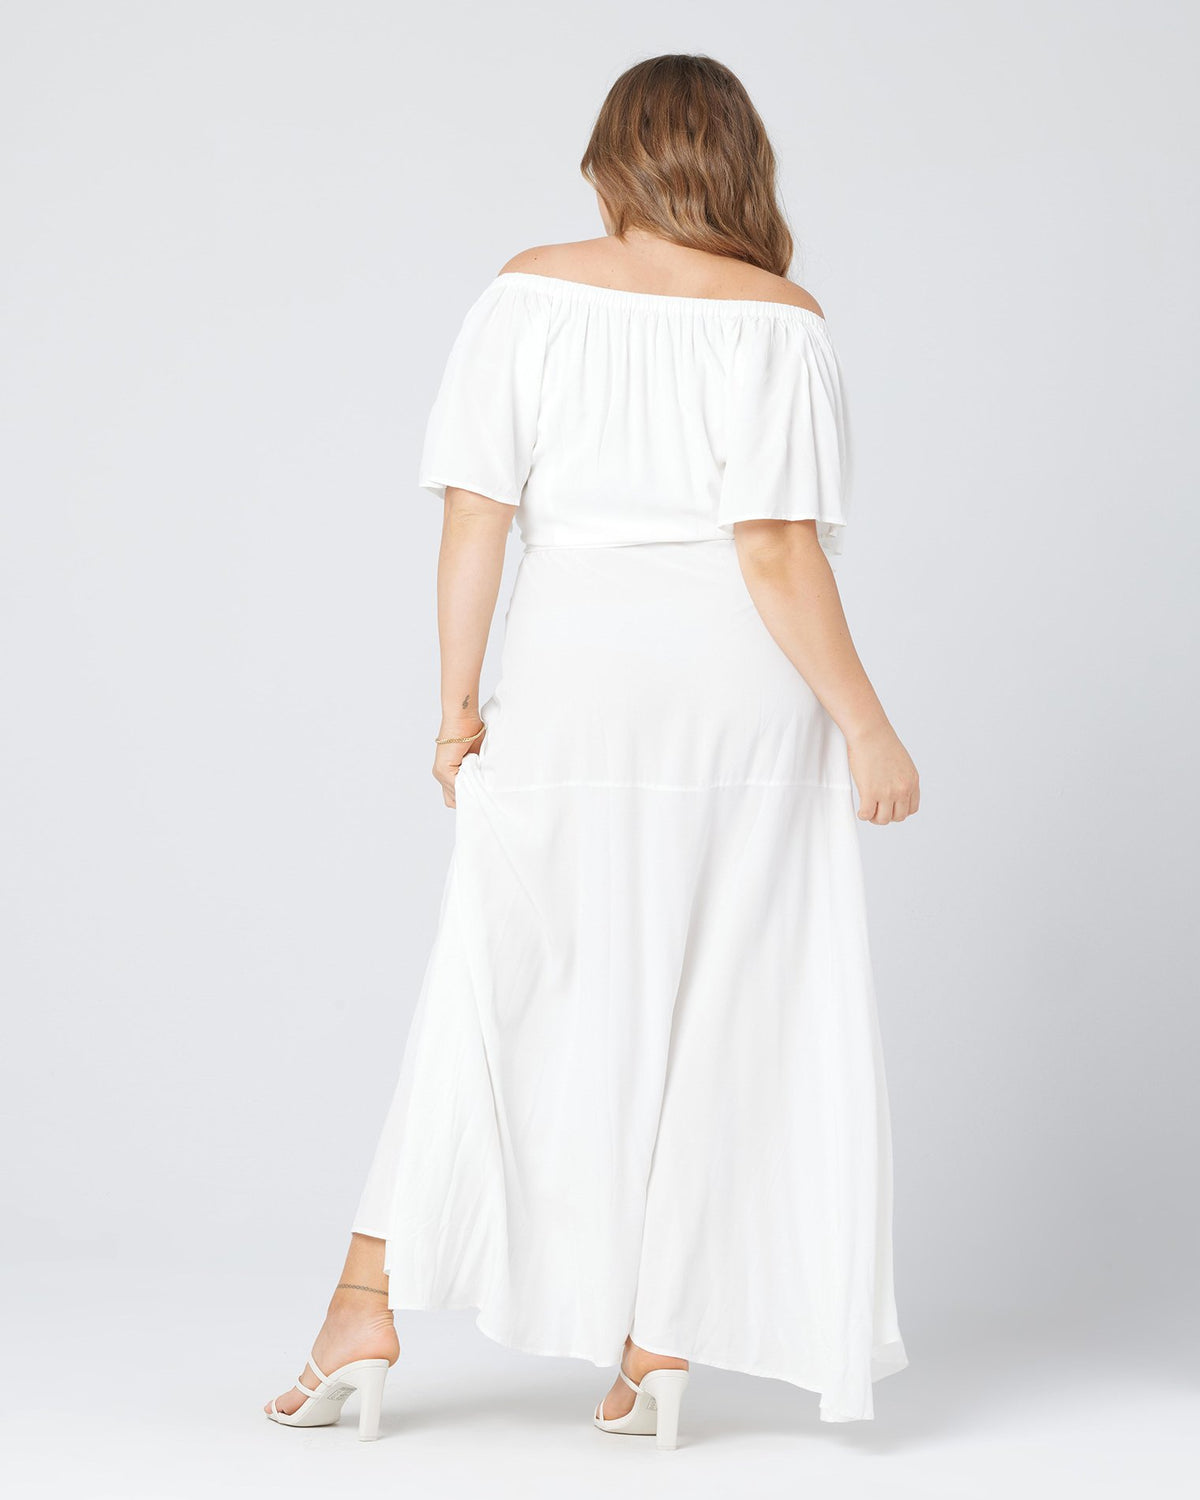 Panama Dress Cream | Model: Ali (size XL)